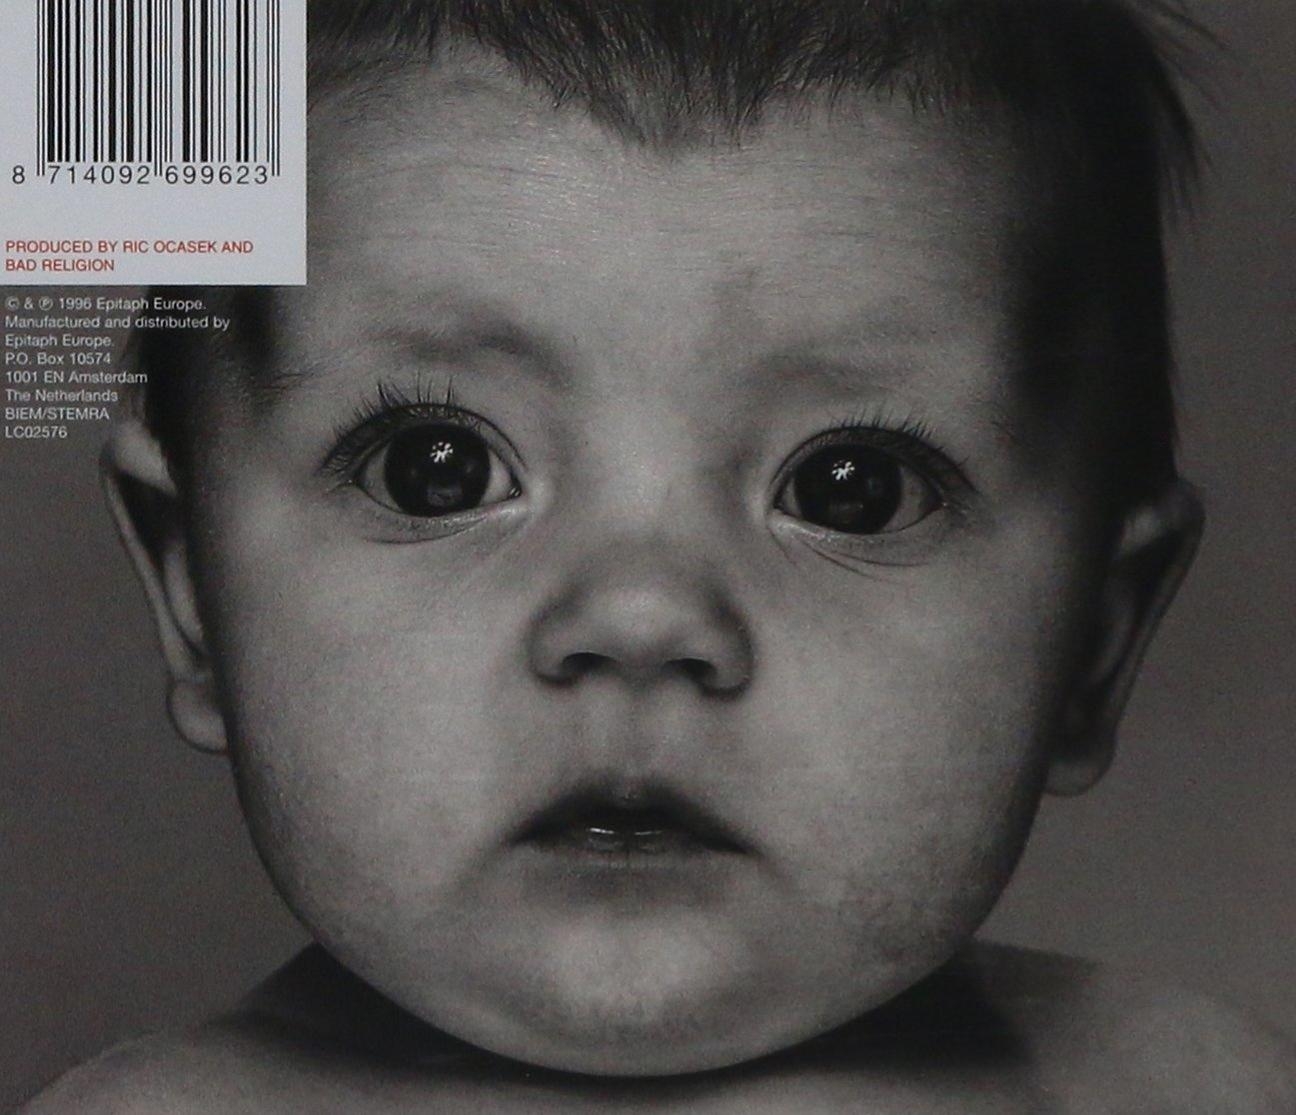 Bad Religion The Gray Race - (CD) 